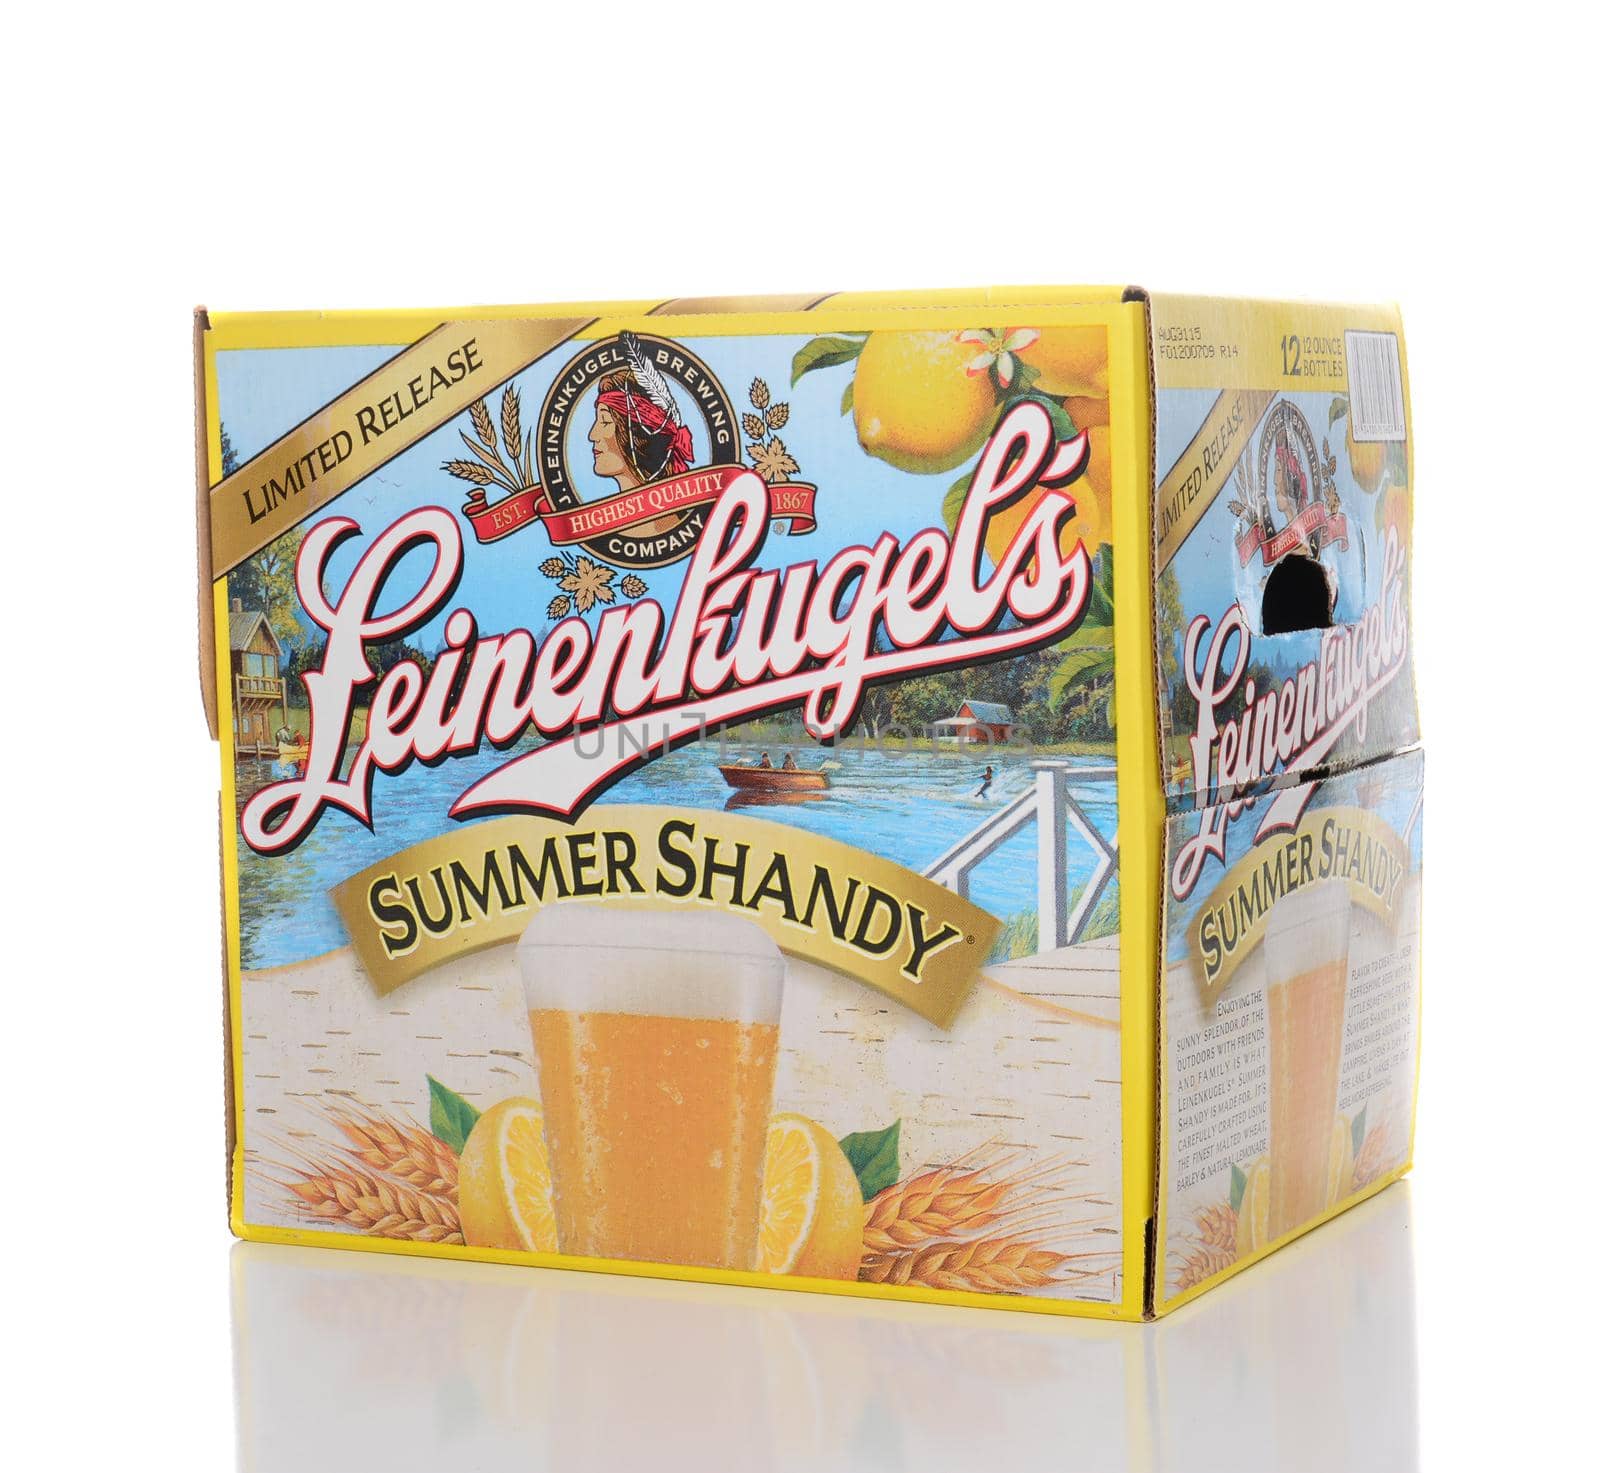 Leinenkugel Summer Shandy 12 Pack by sCukrov